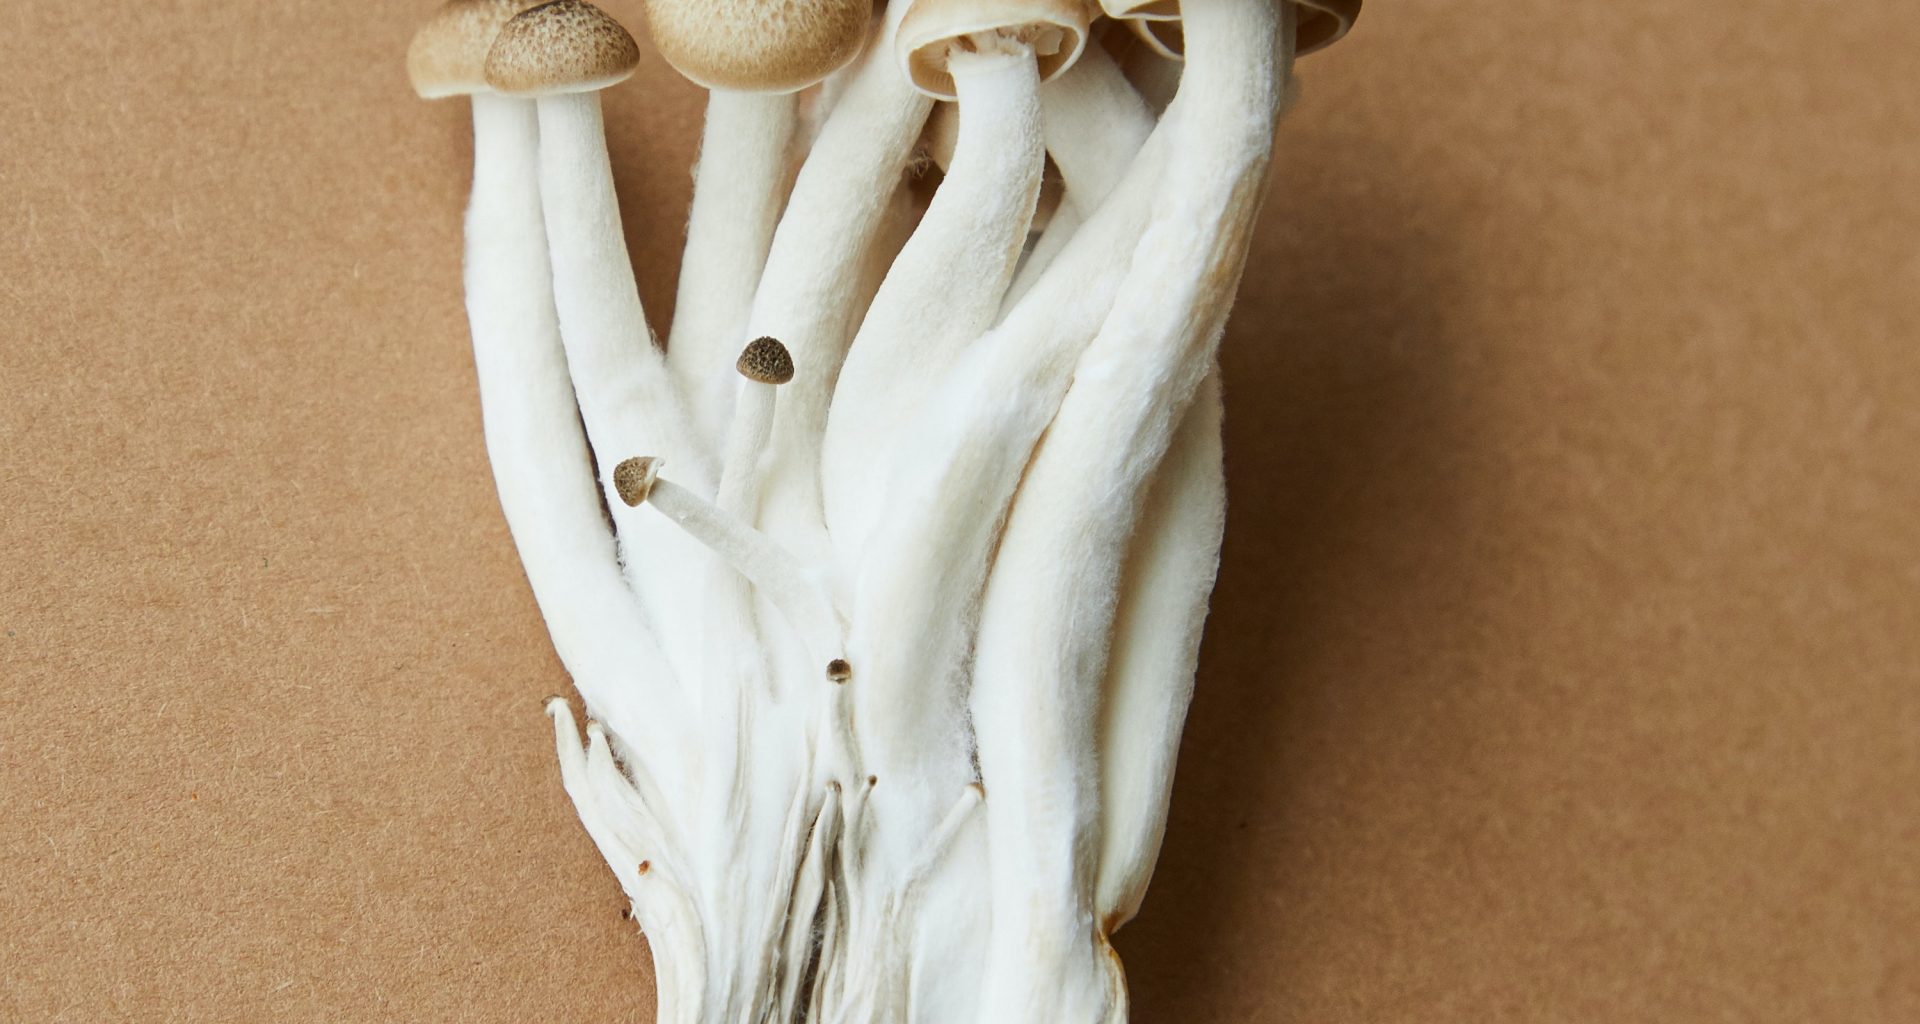 Mushrooms on beige backdrop